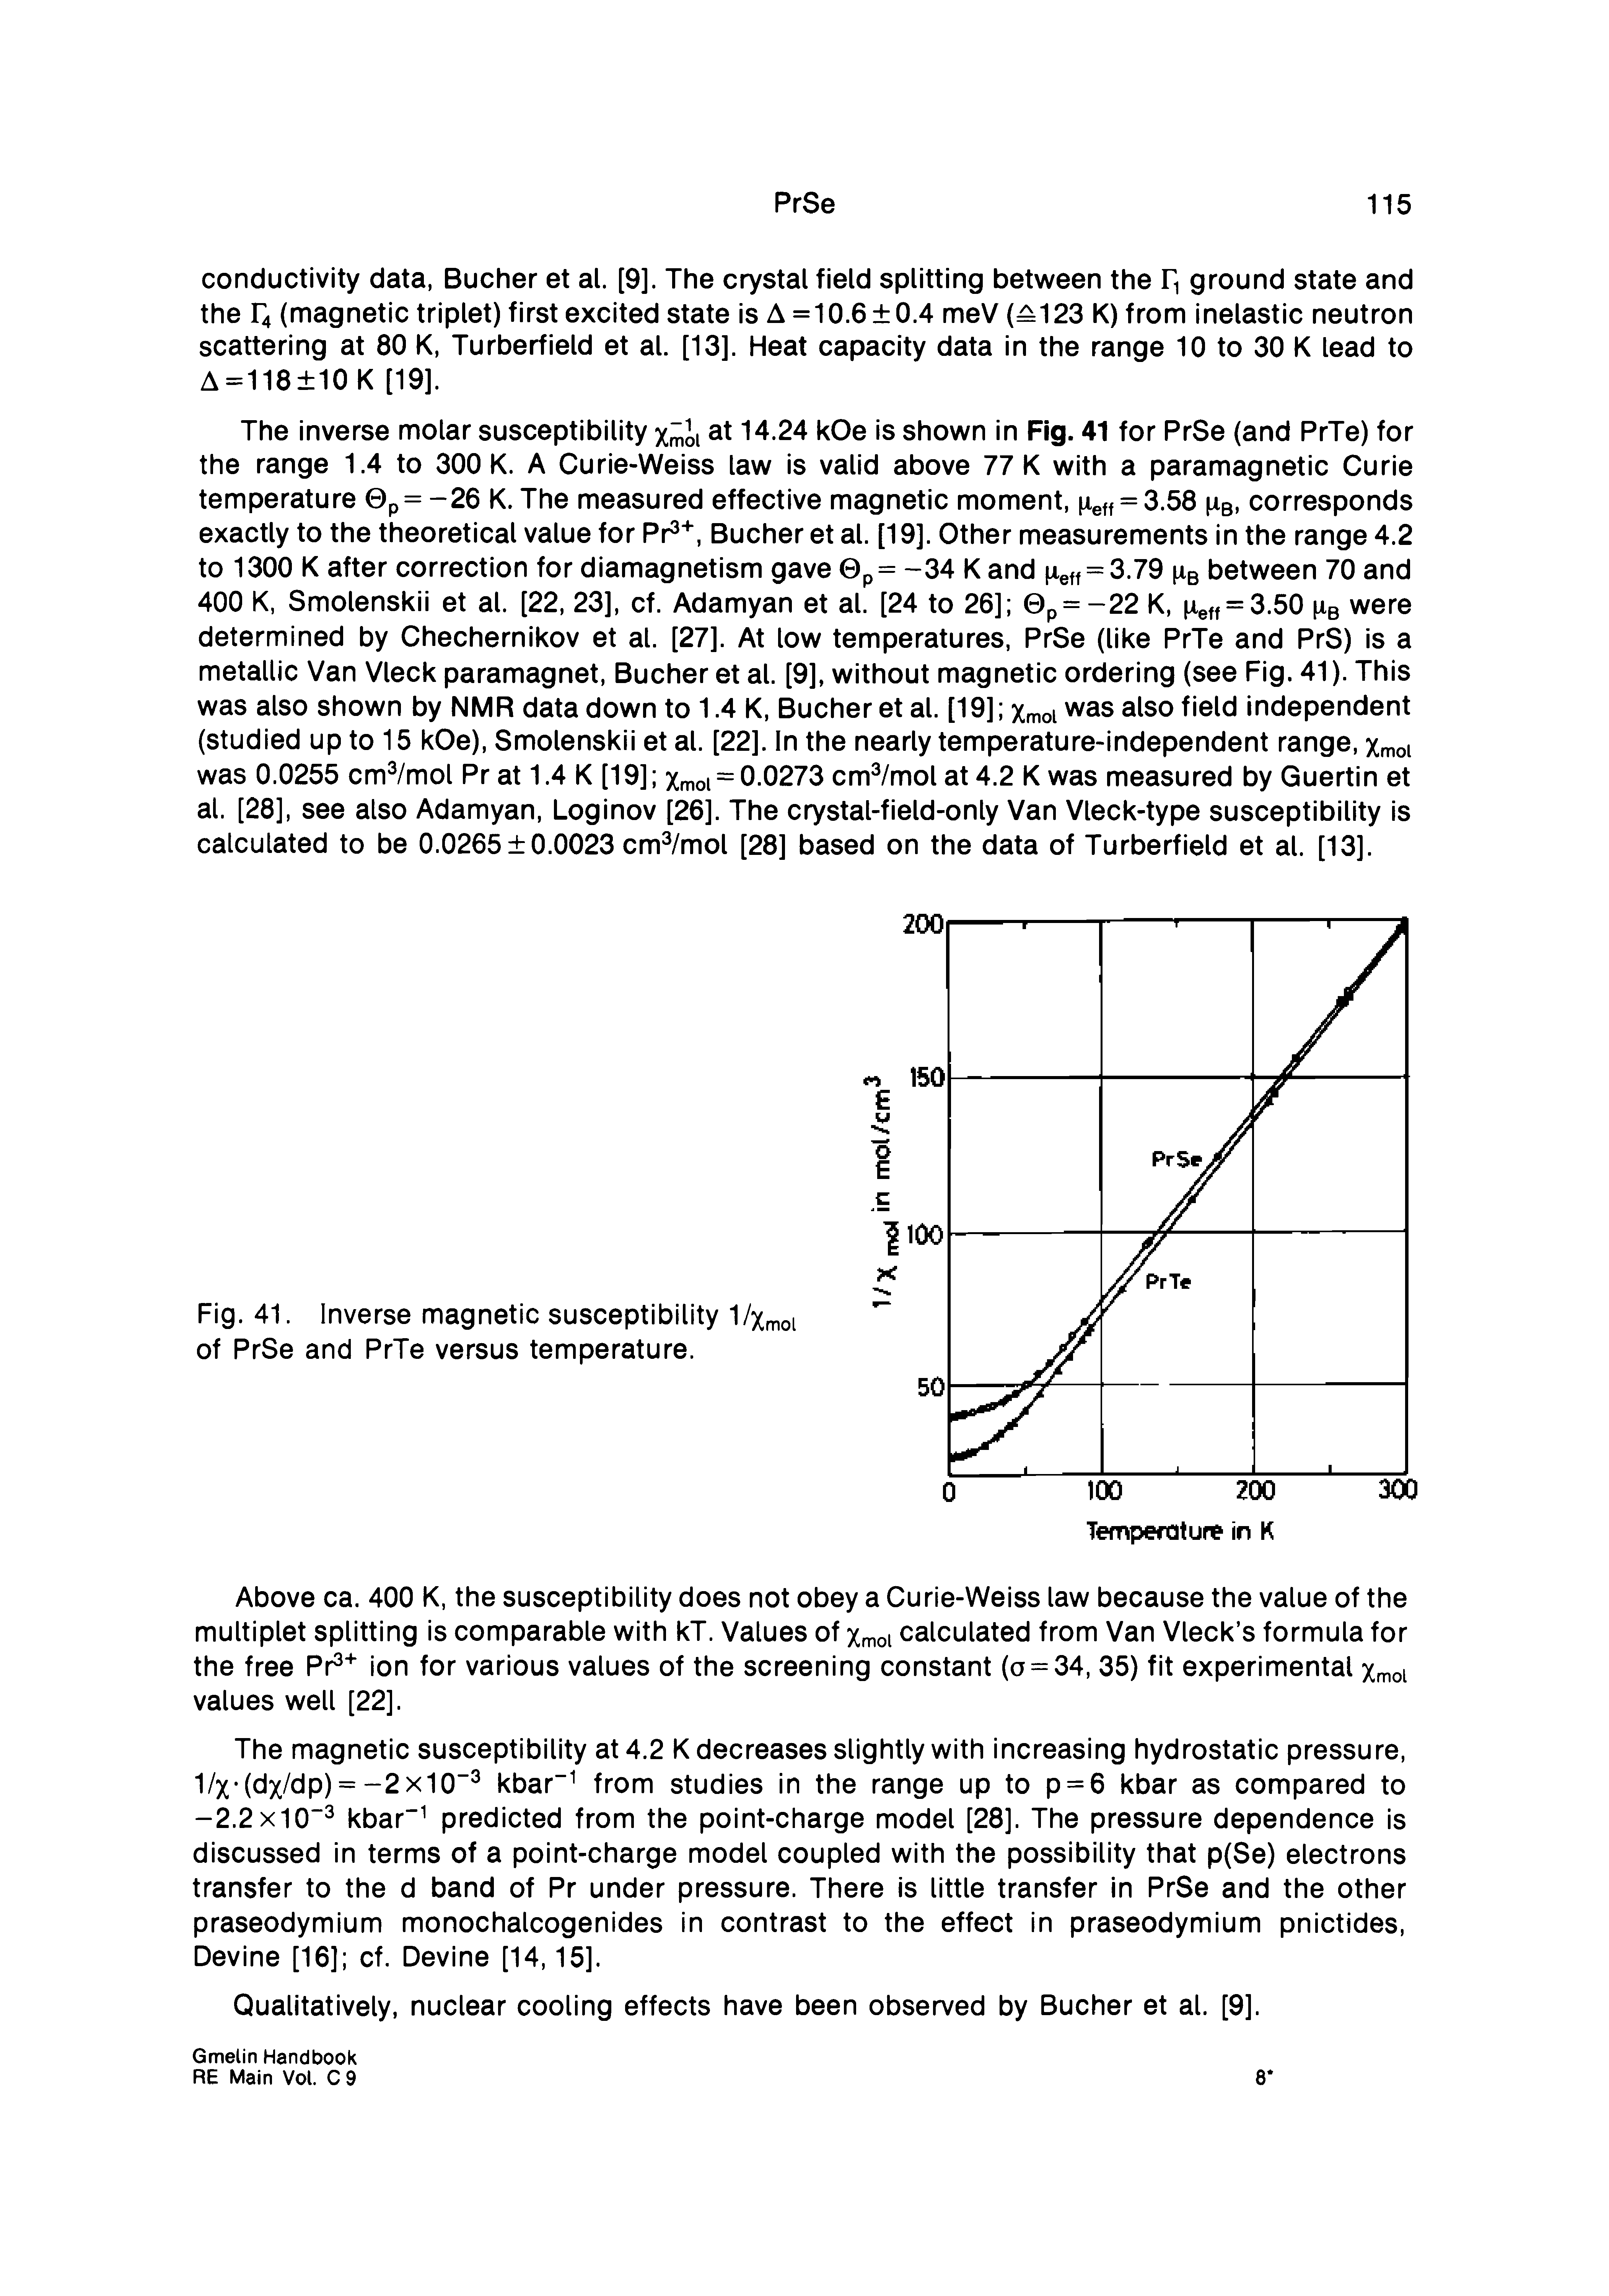 Fig. 41. Inverse magnetic susceptibility 1/xmoi of PrSe and PrTe versus temperature.